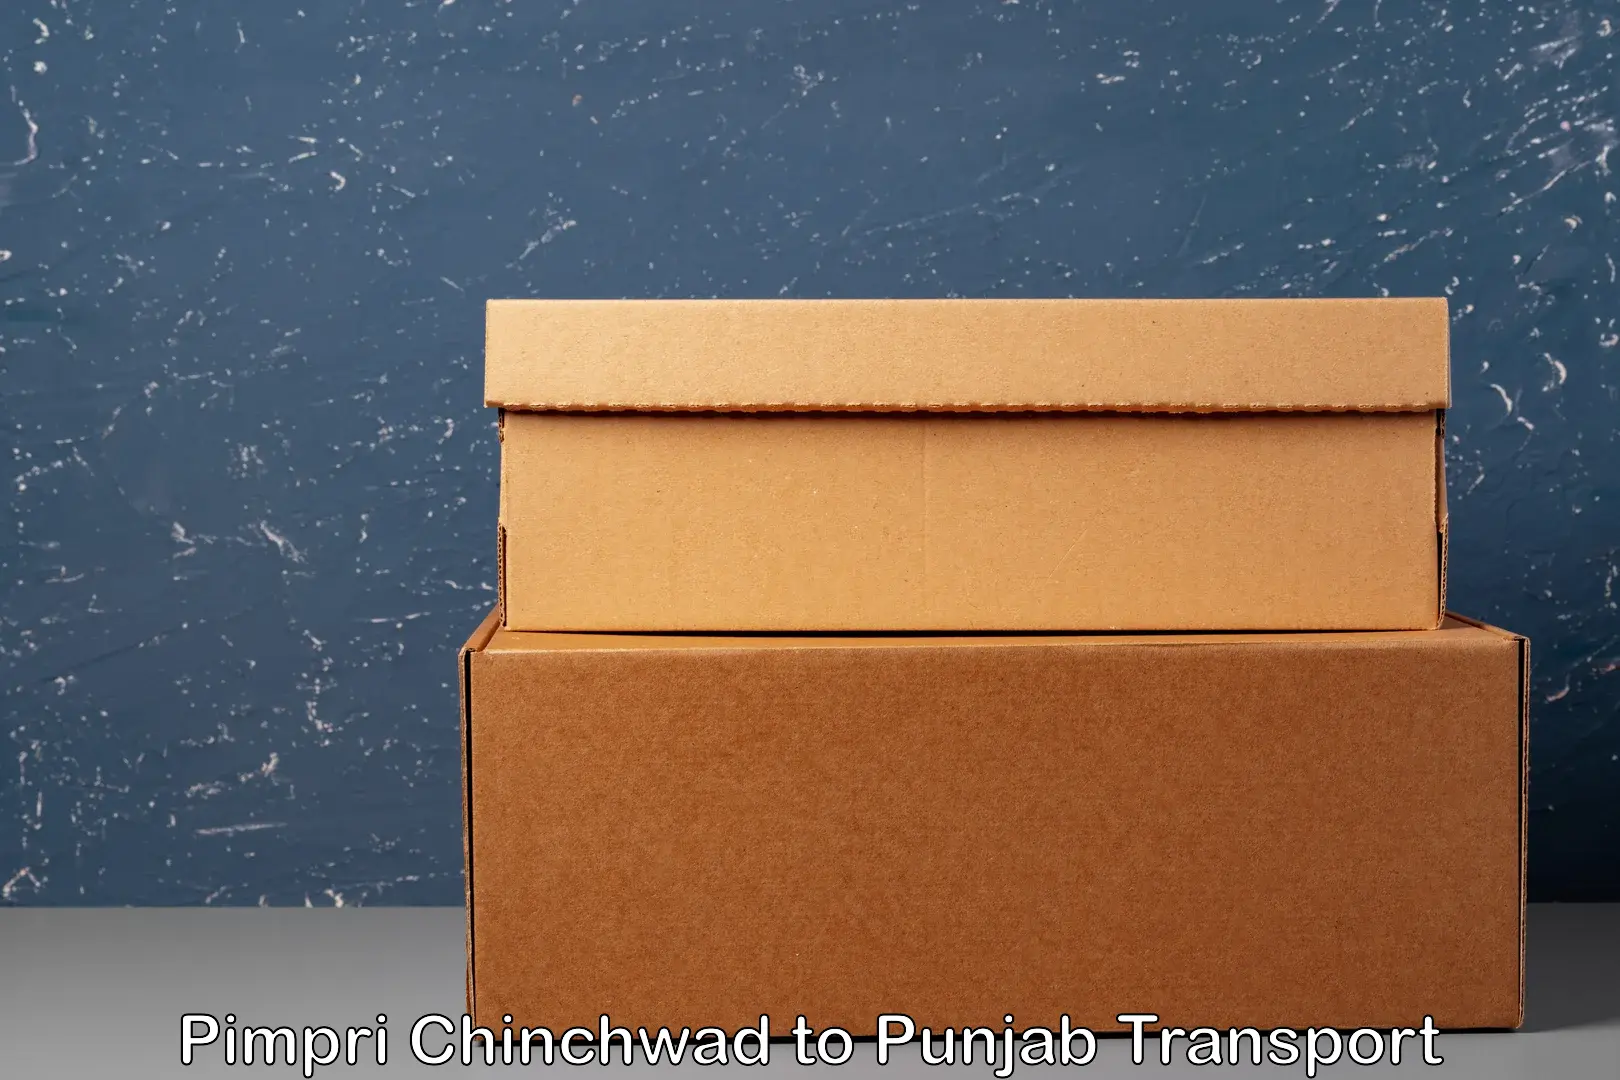 Transport shared services Pimpri Chinchwad to Punjab